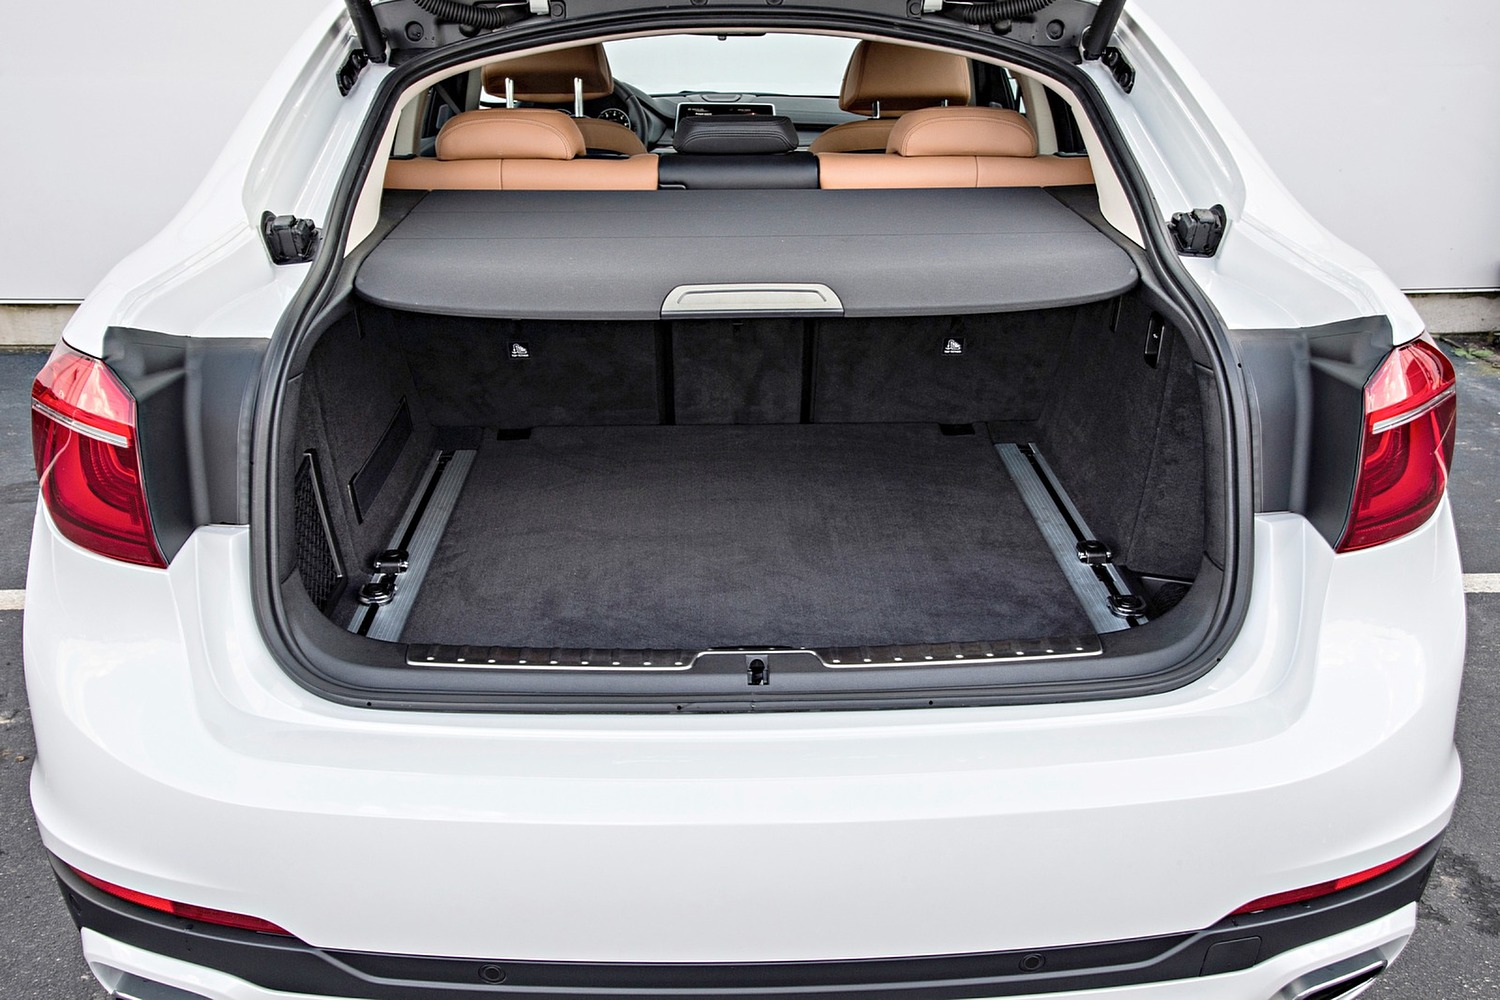 BMW X6 xDrive50i 4dr SUV Cargo Area (2016 model year shown)